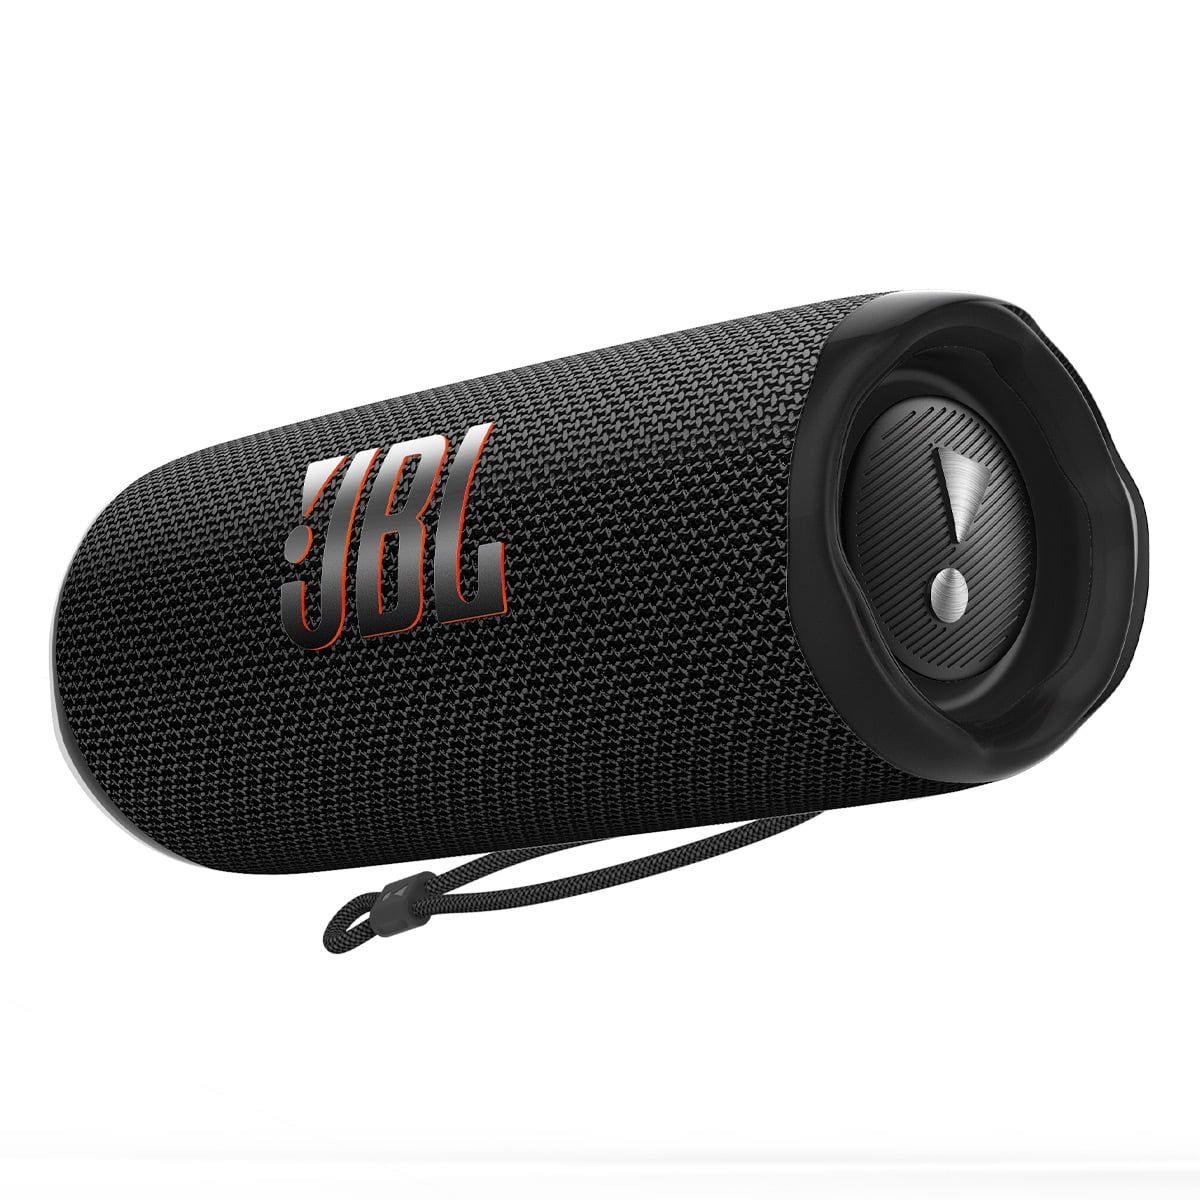 JBL Portable speaker with Bluetooth, built-in battery and waterproof | Walmart (US)